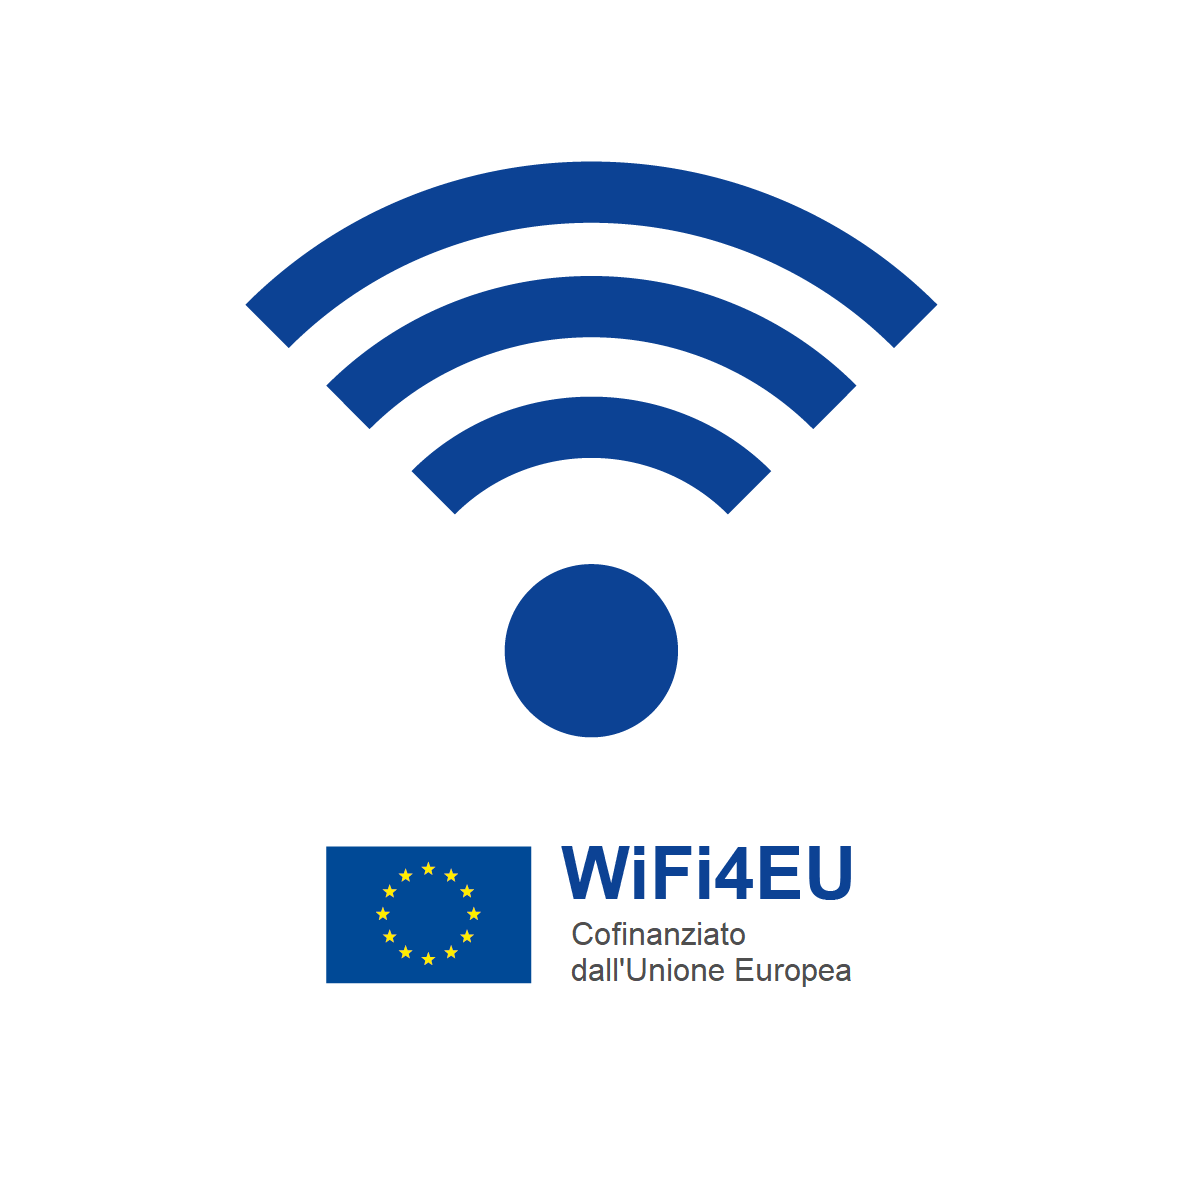 WiFi4EU signage example 4 IT